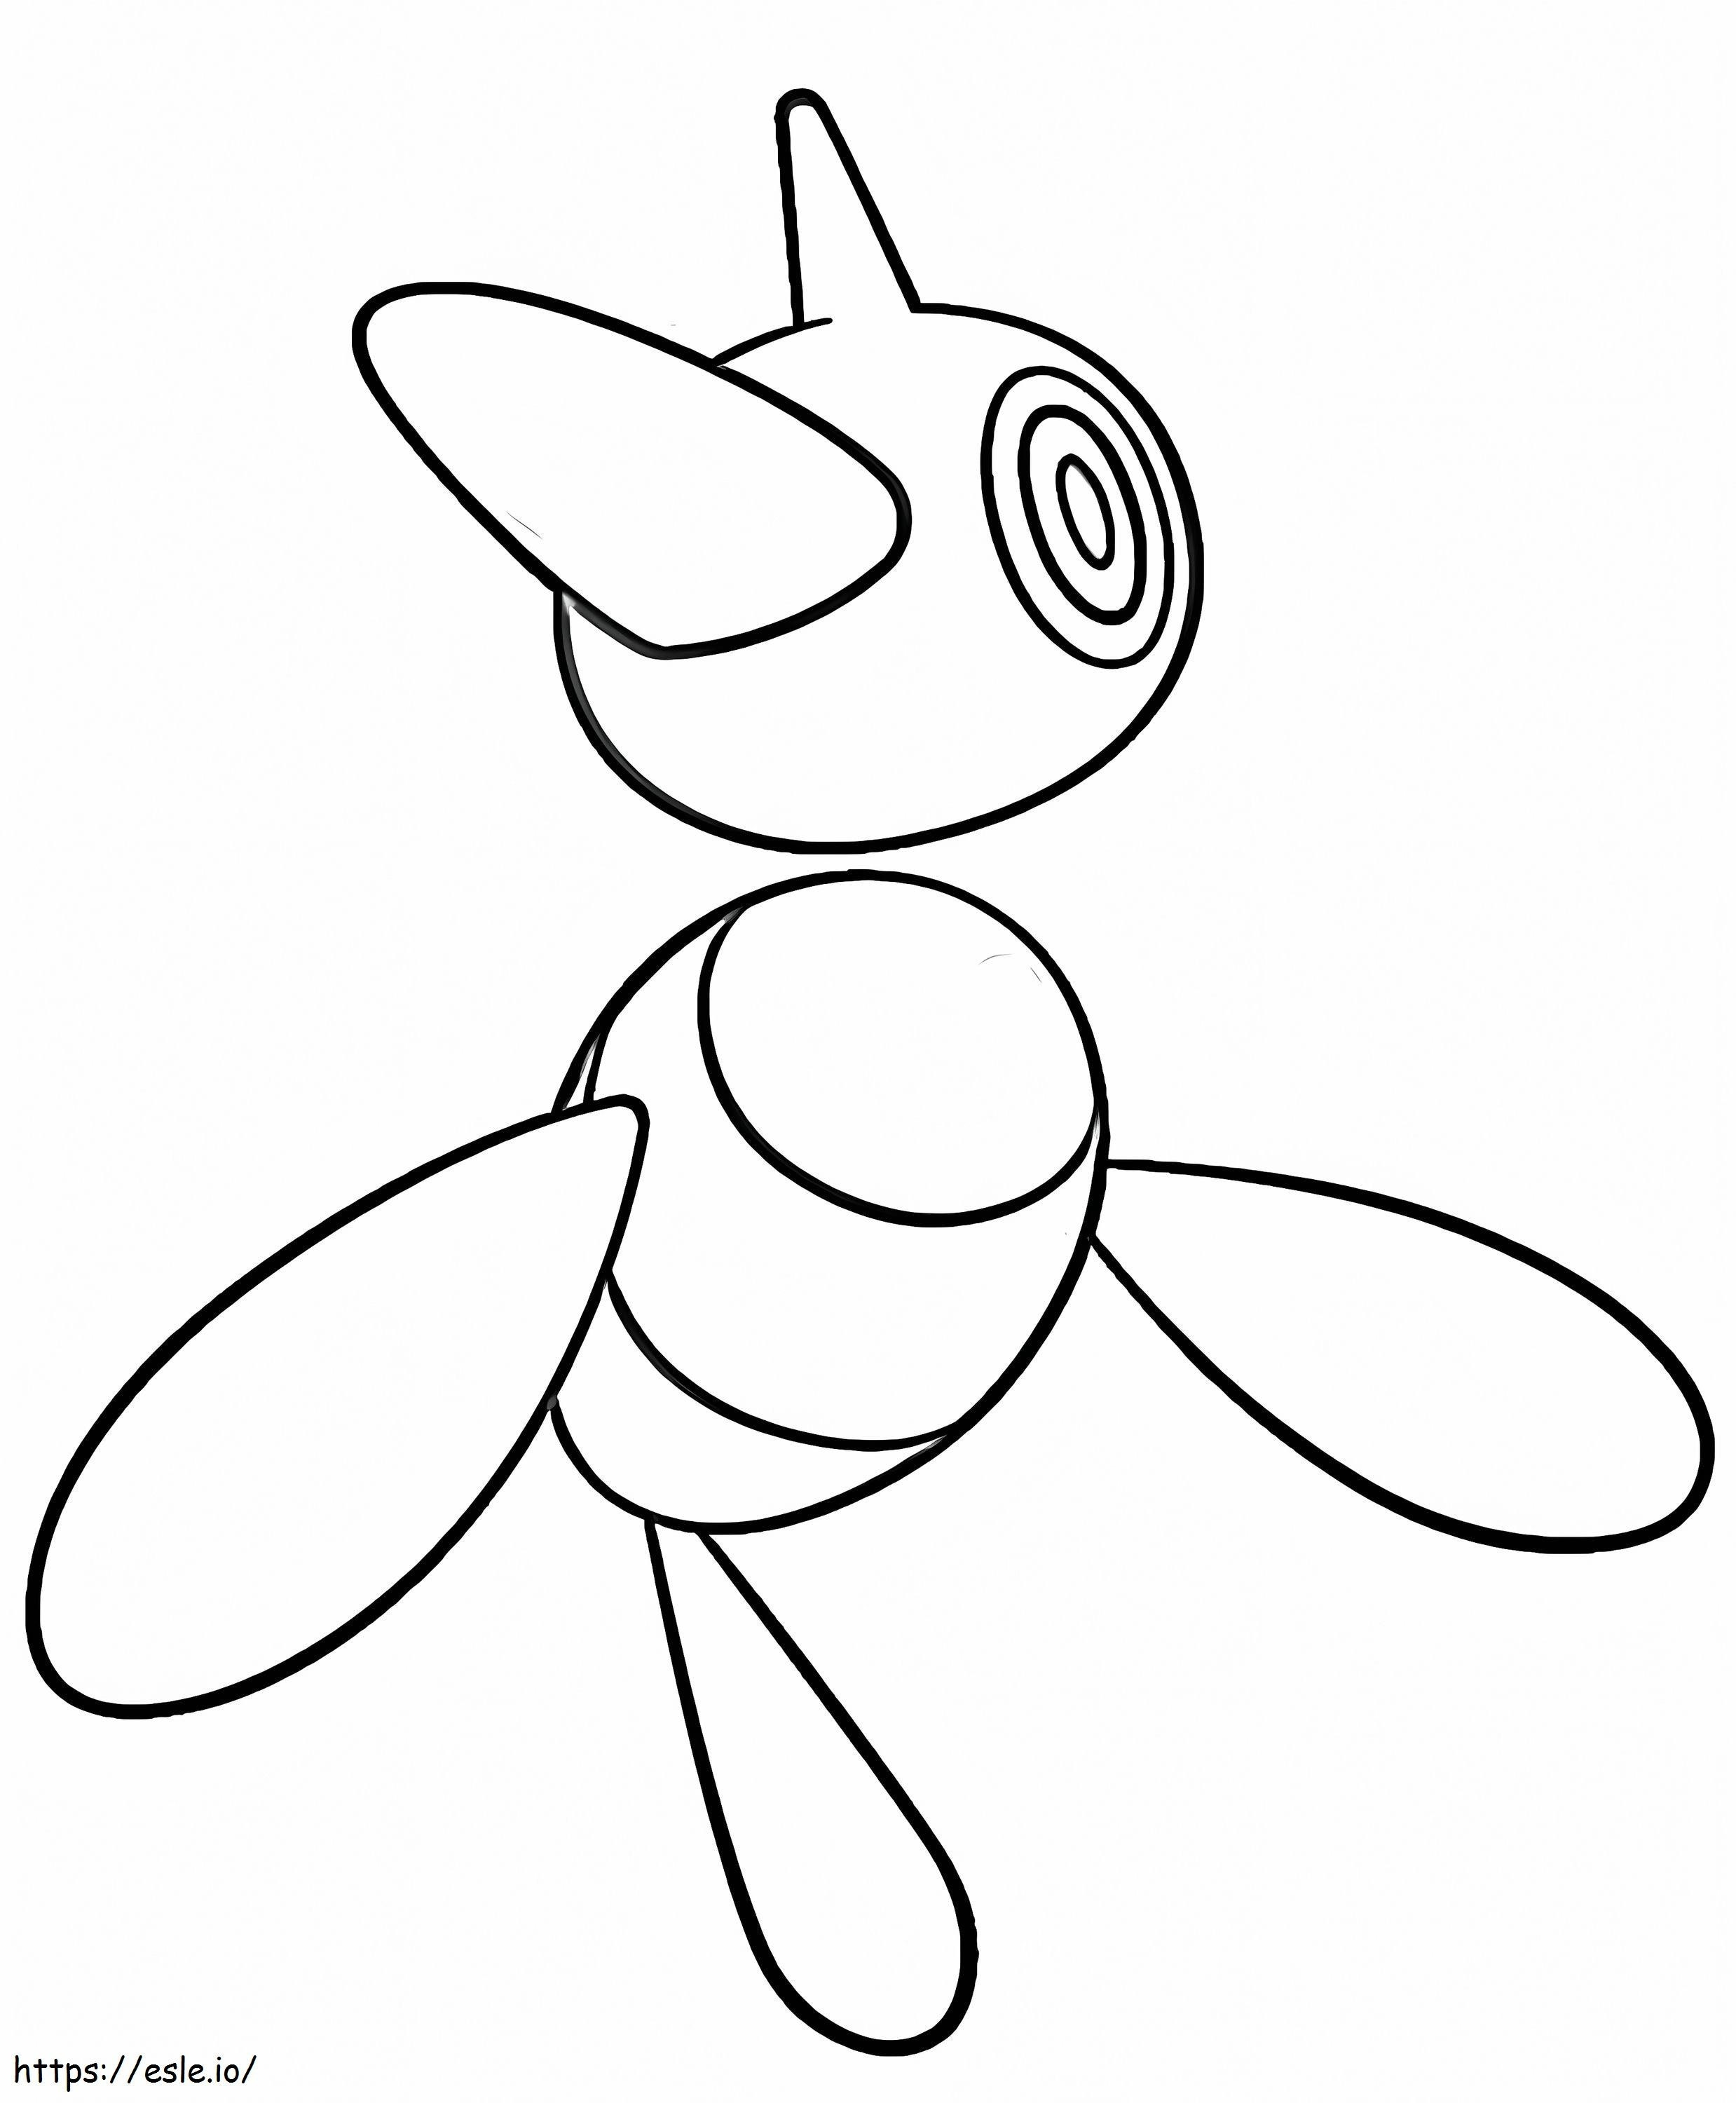 Porygon Z-Pokémon ausmalbilder